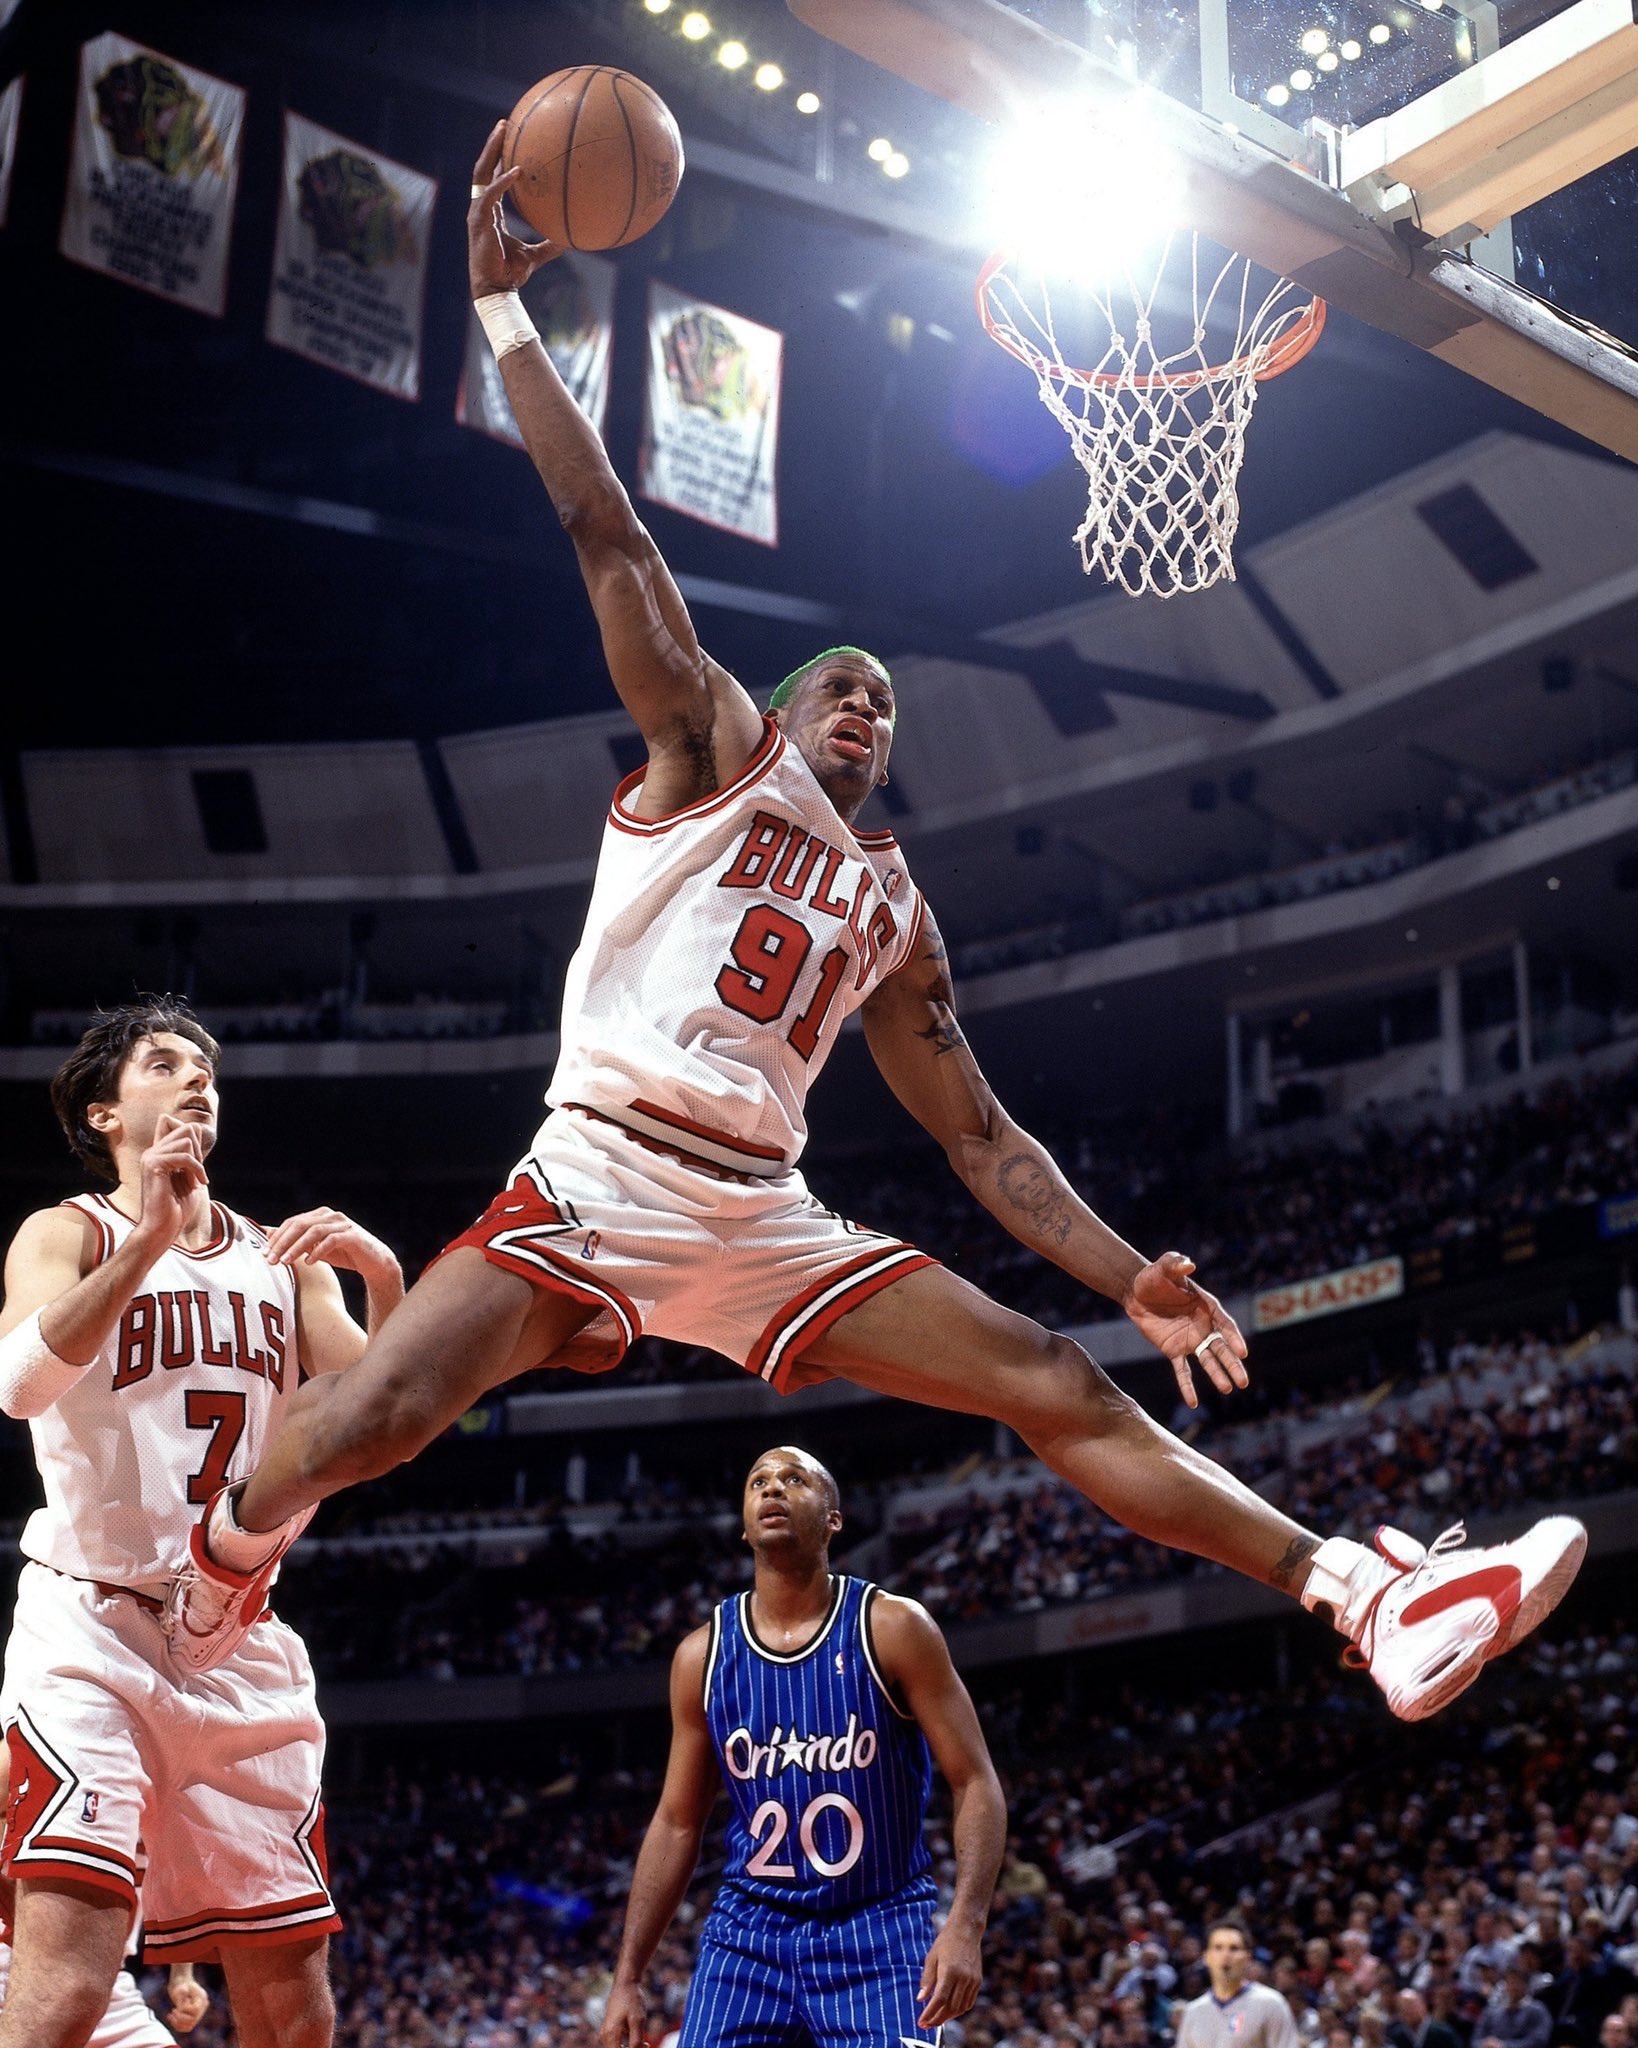 Chicagobulls: The greatest rebounder of all-time.

Happy Birthday, Dennis Rodman! 